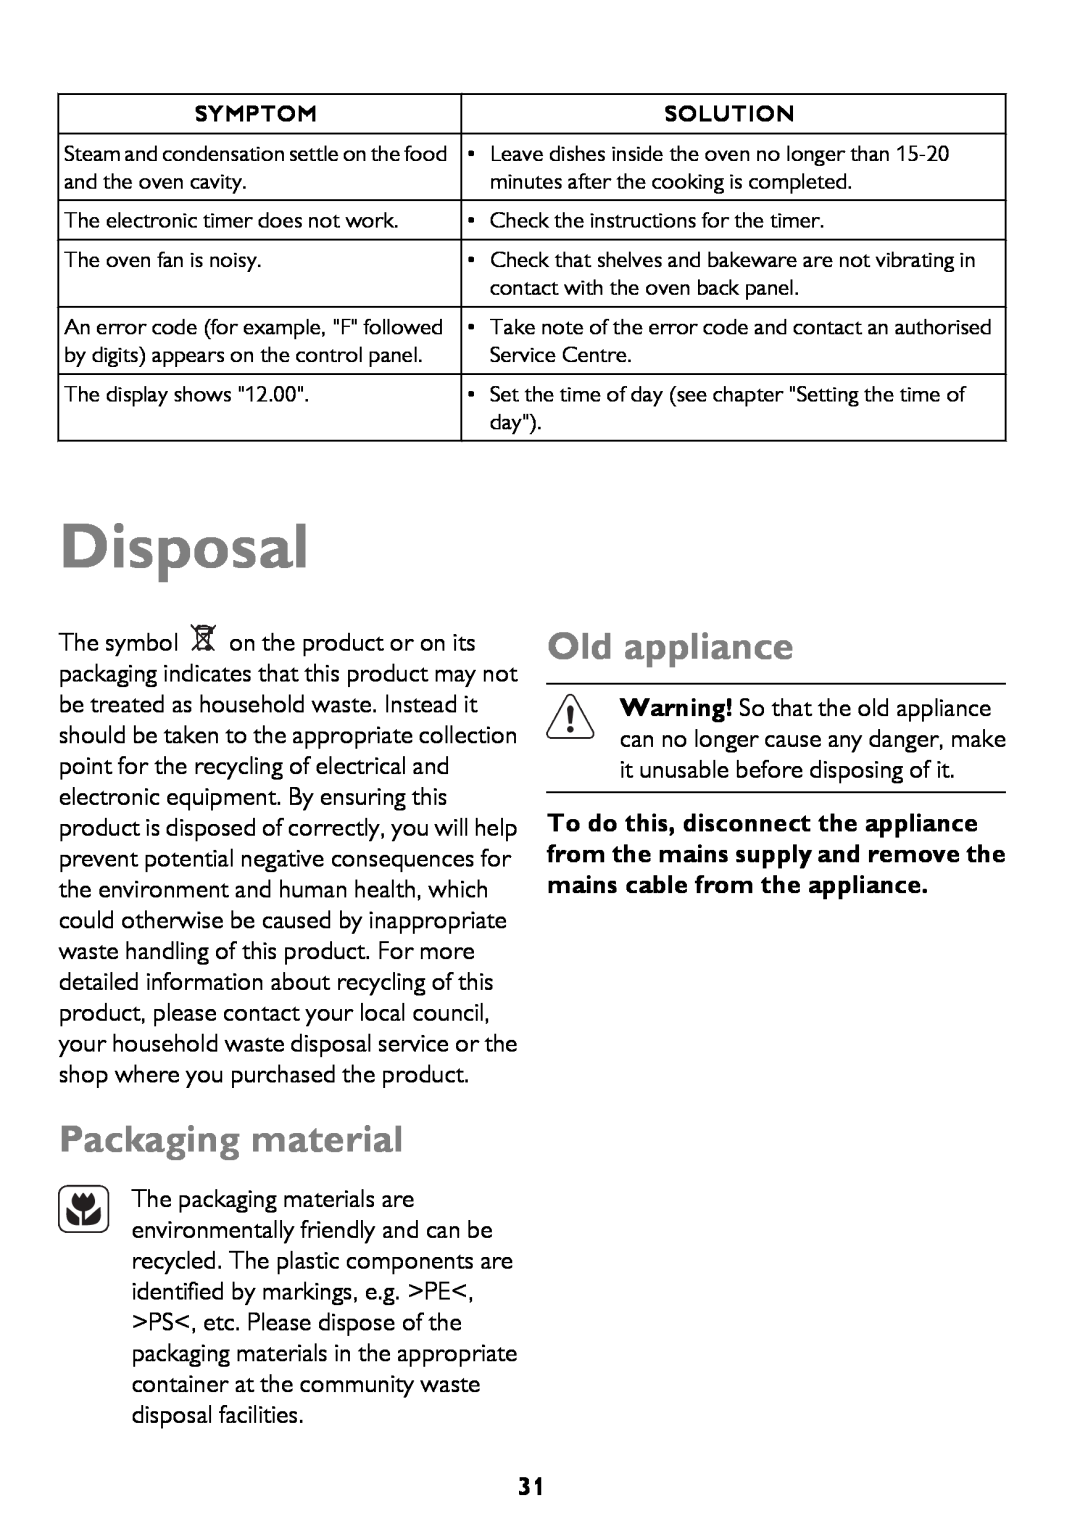 John Lewis JLBIOS662 instruction manual Disposal, Packaging material, Old appliance 